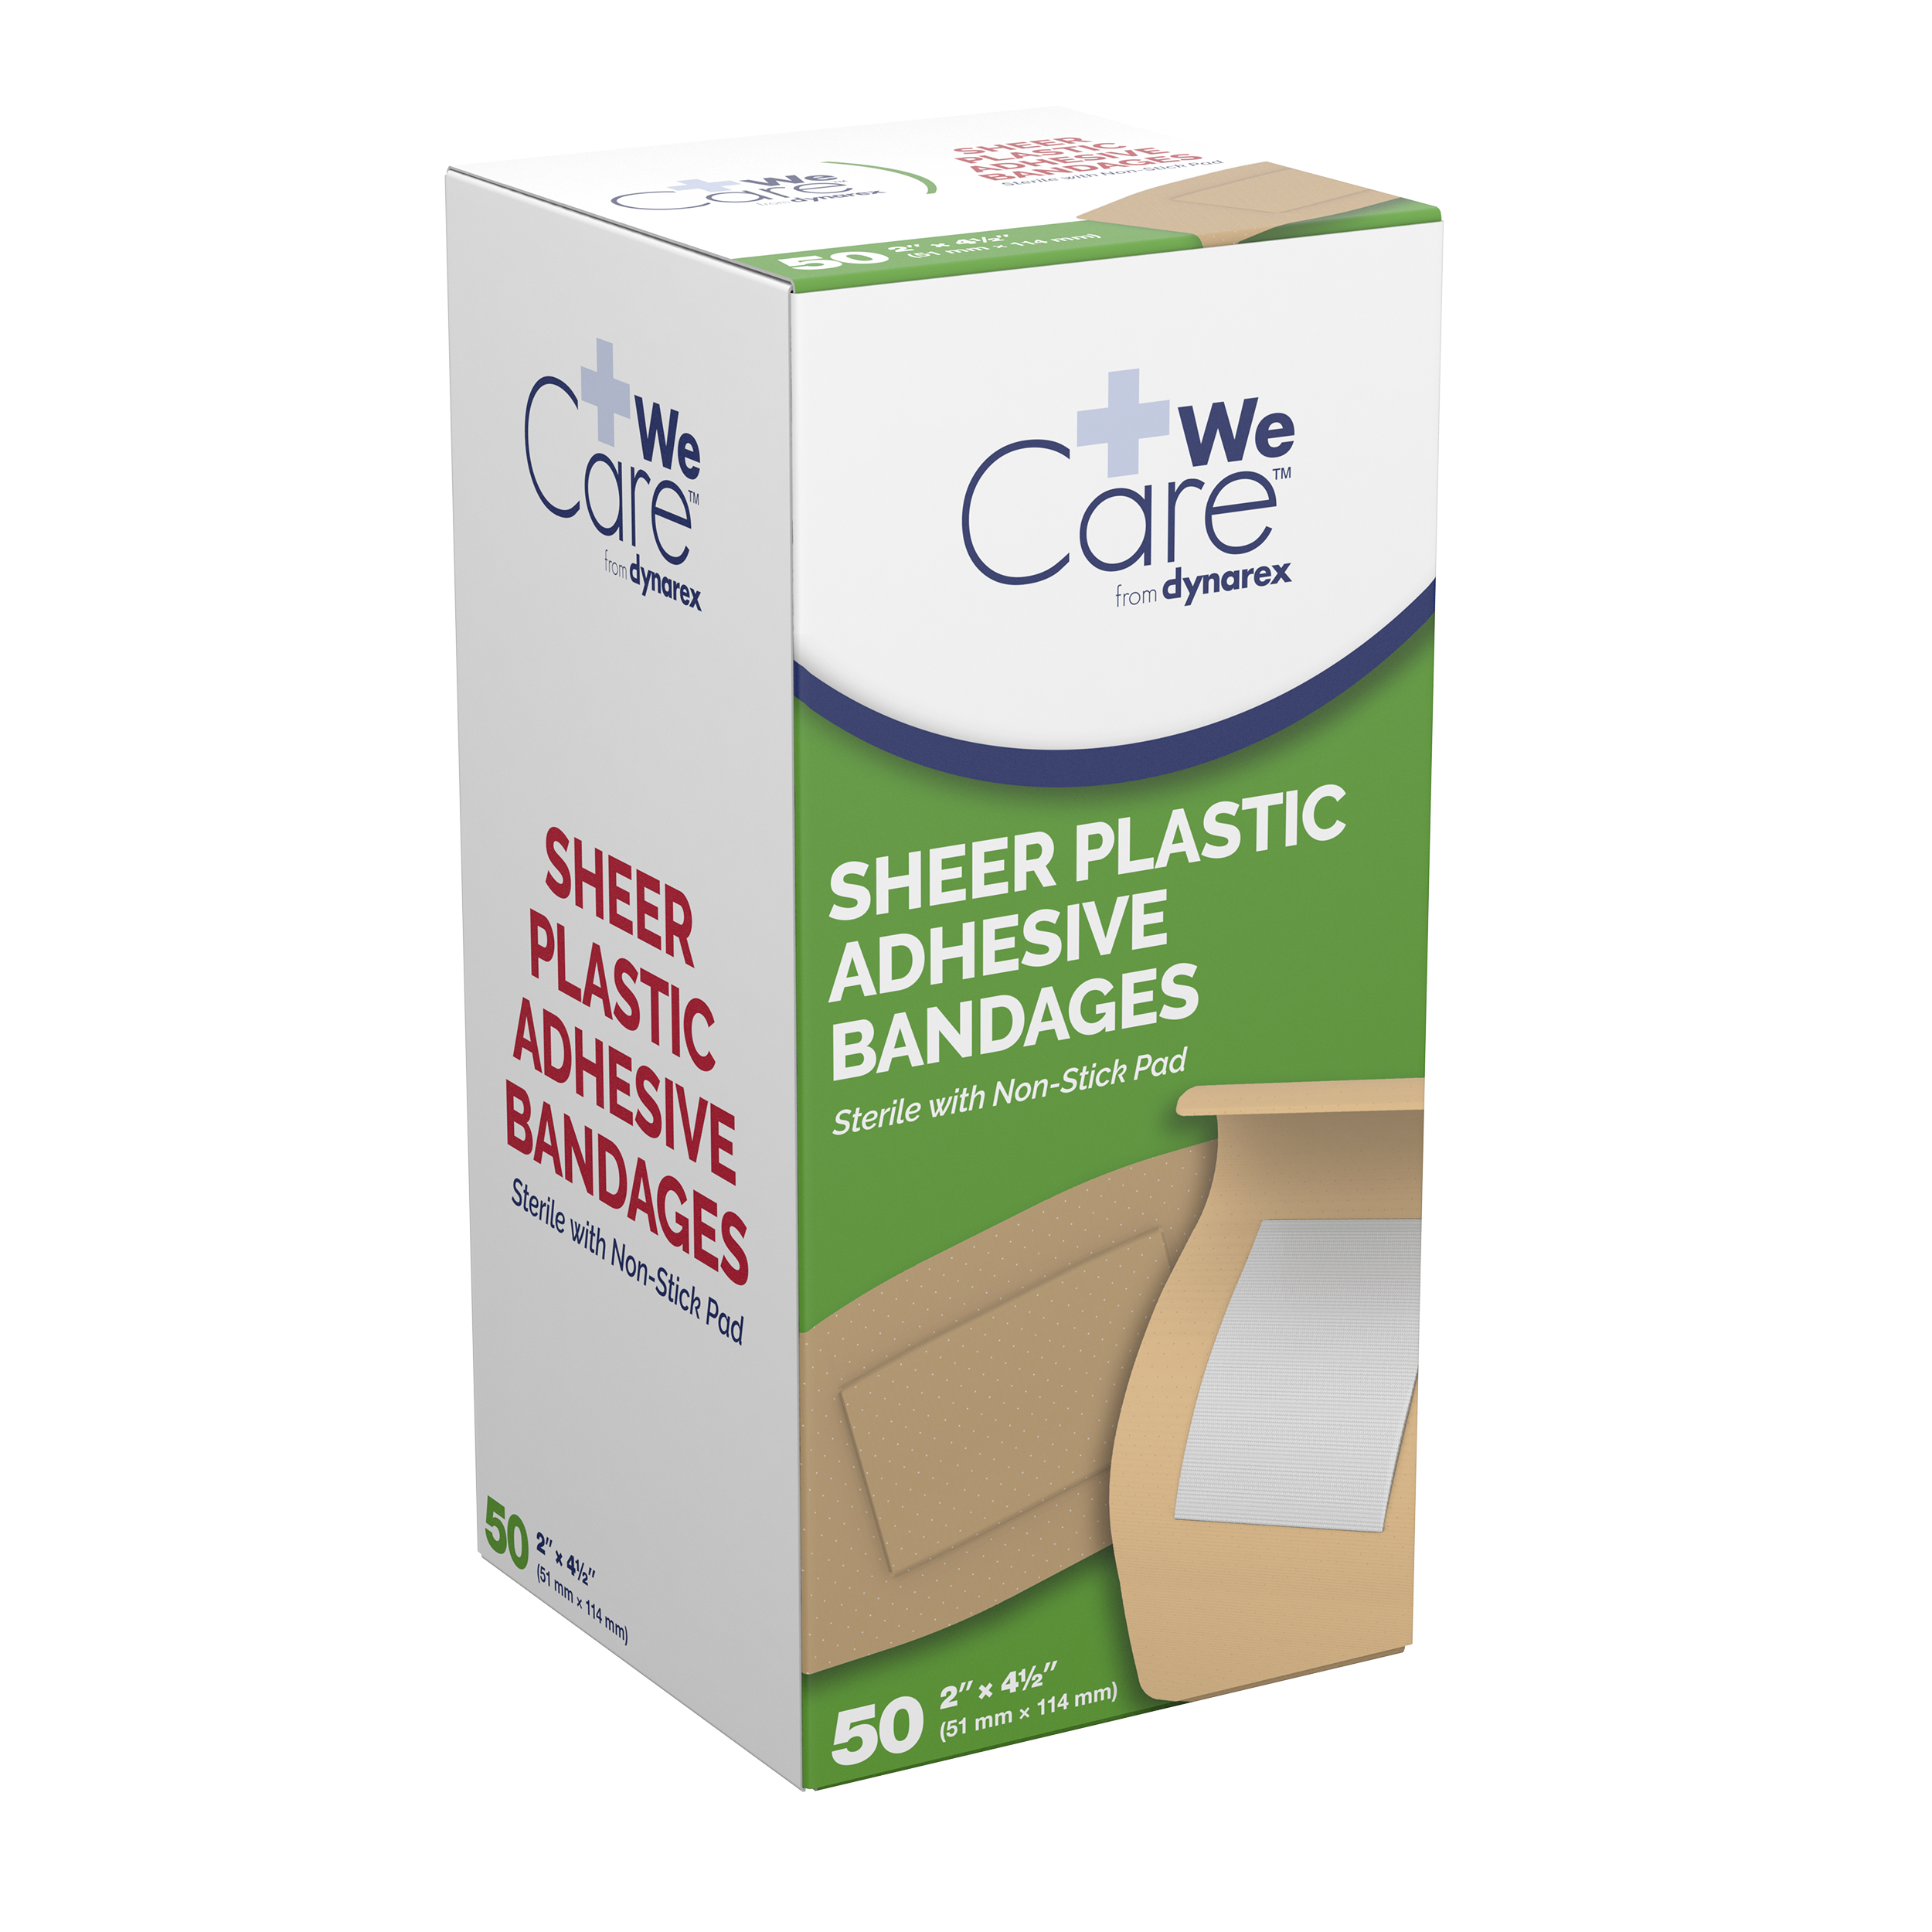 Sheer Plastic Adhesive Bandages Sterile - 2